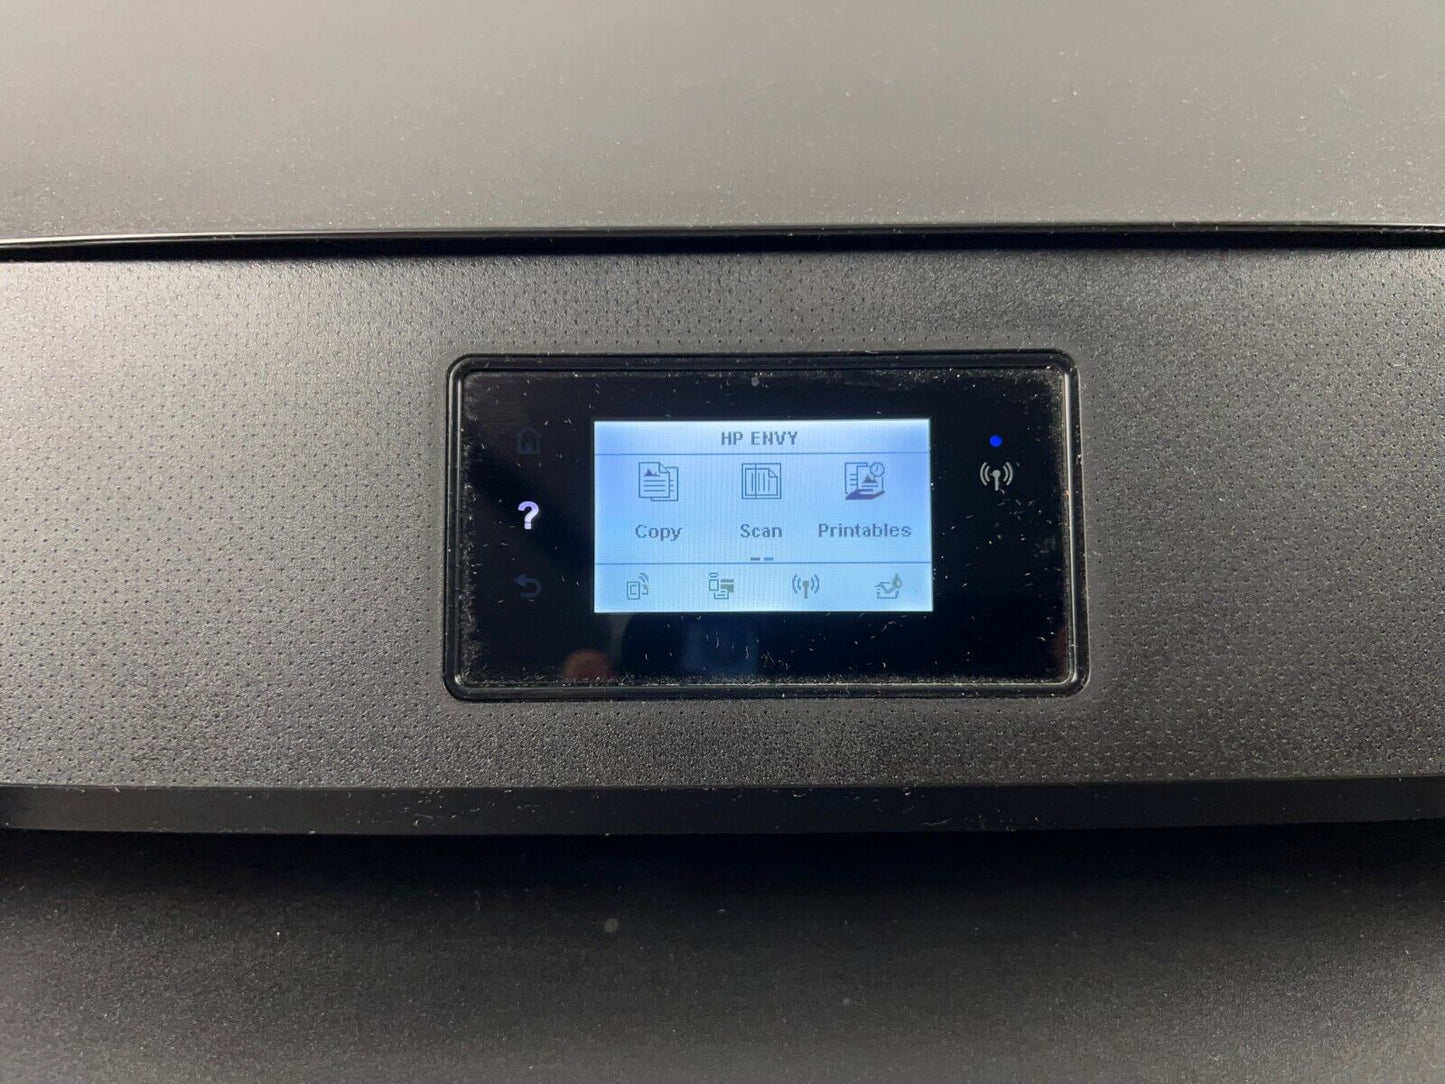 HP ENVY 5540 Wireless All-In-One Inkjet Printer Scanner Copier Needs Ink